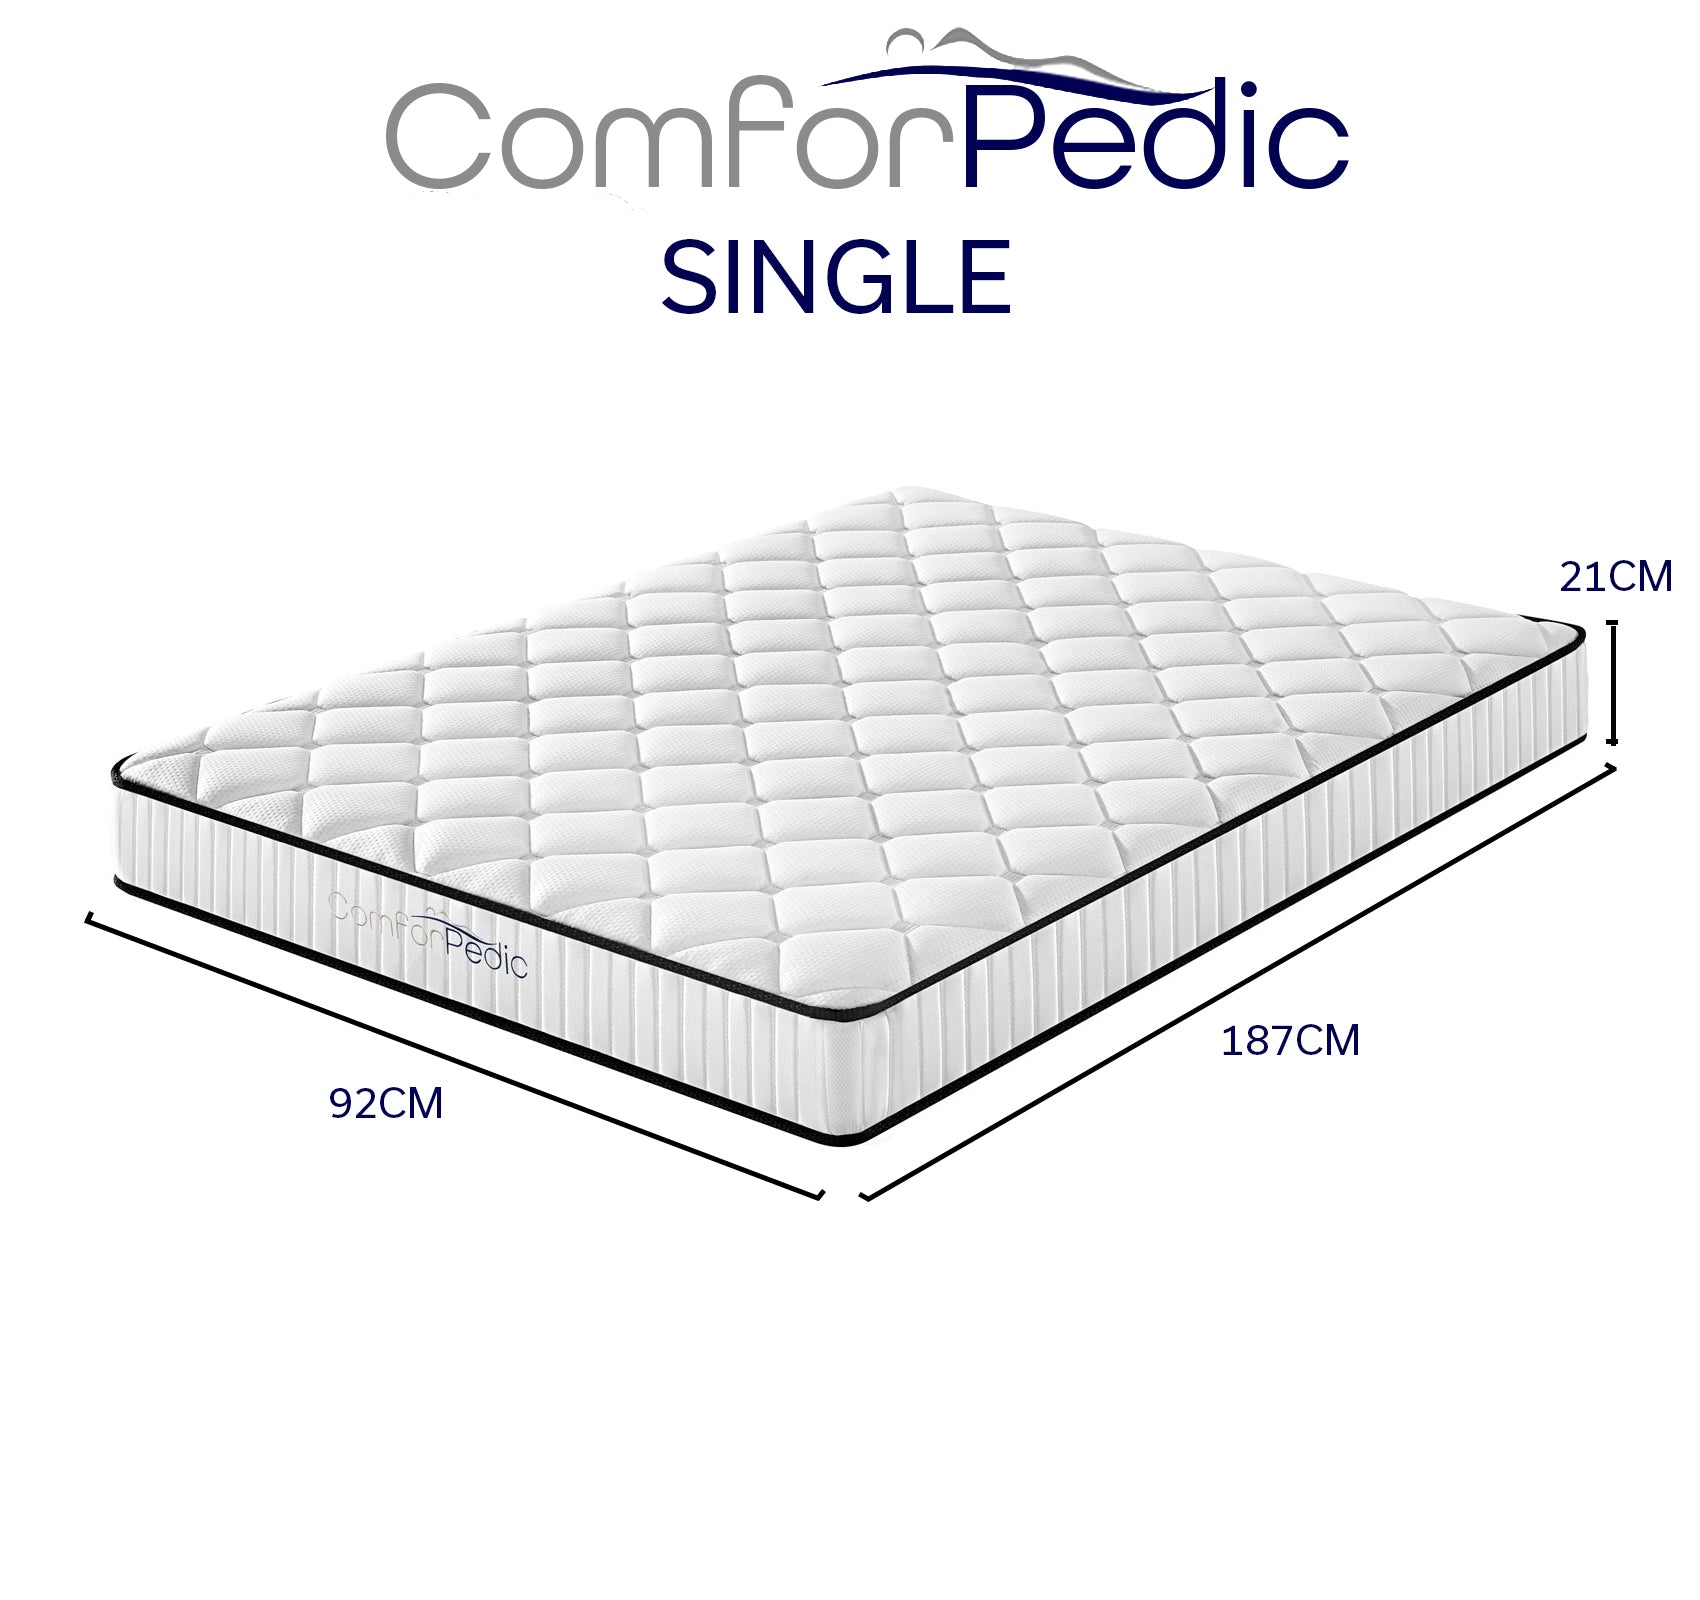 Royal Comfort Comforpedic Bonnell Spring Mattress - Single